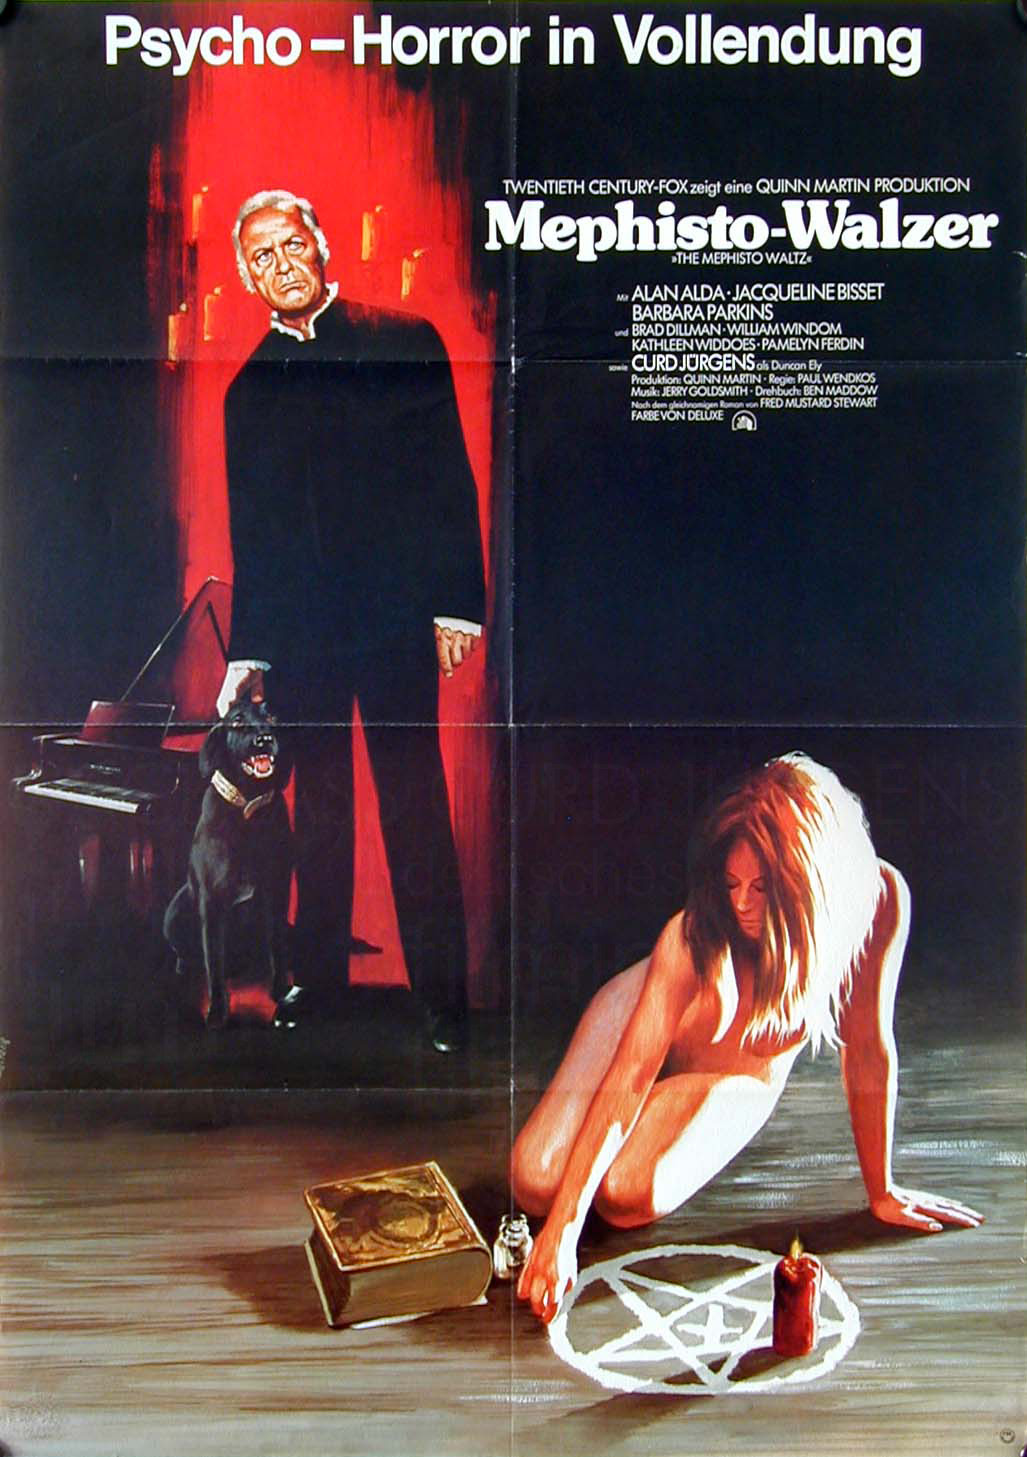 THE MEPHISTO WALTZ (1971)